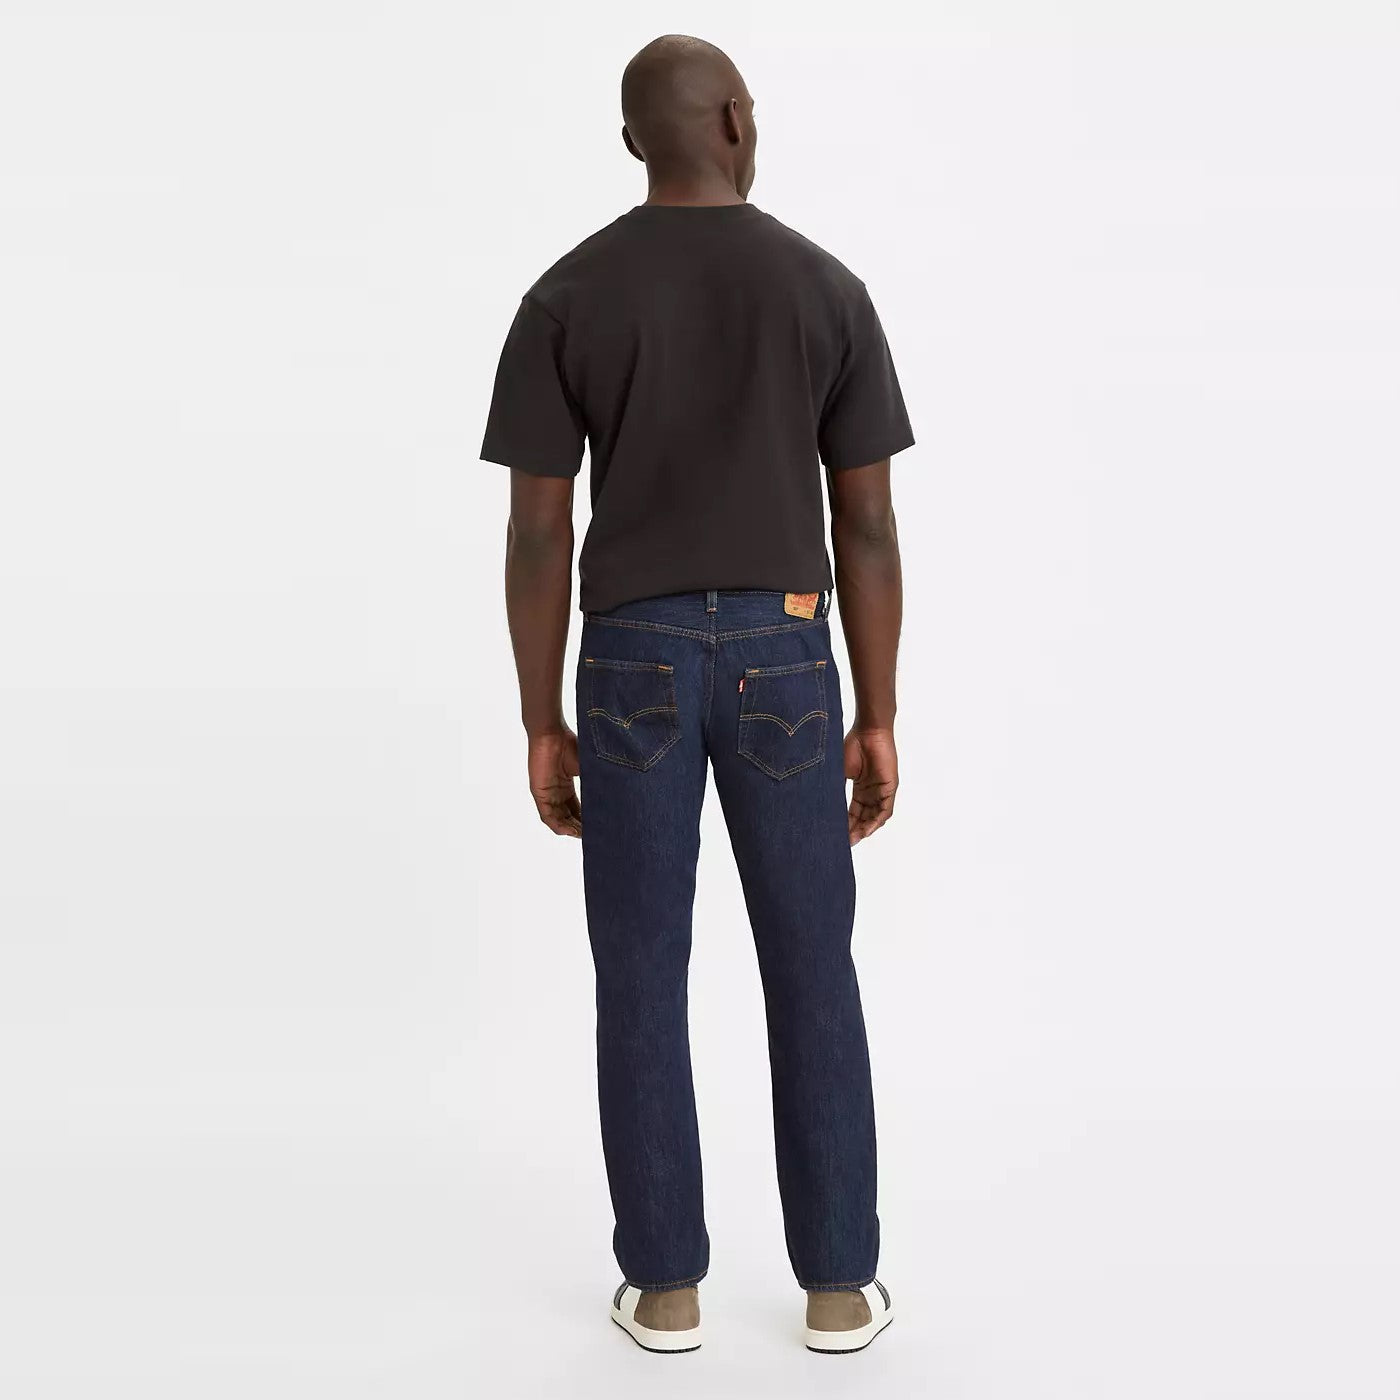 Good Neighbour  Levi's 501 Original Fit Jeans 32 Length (Rinse)